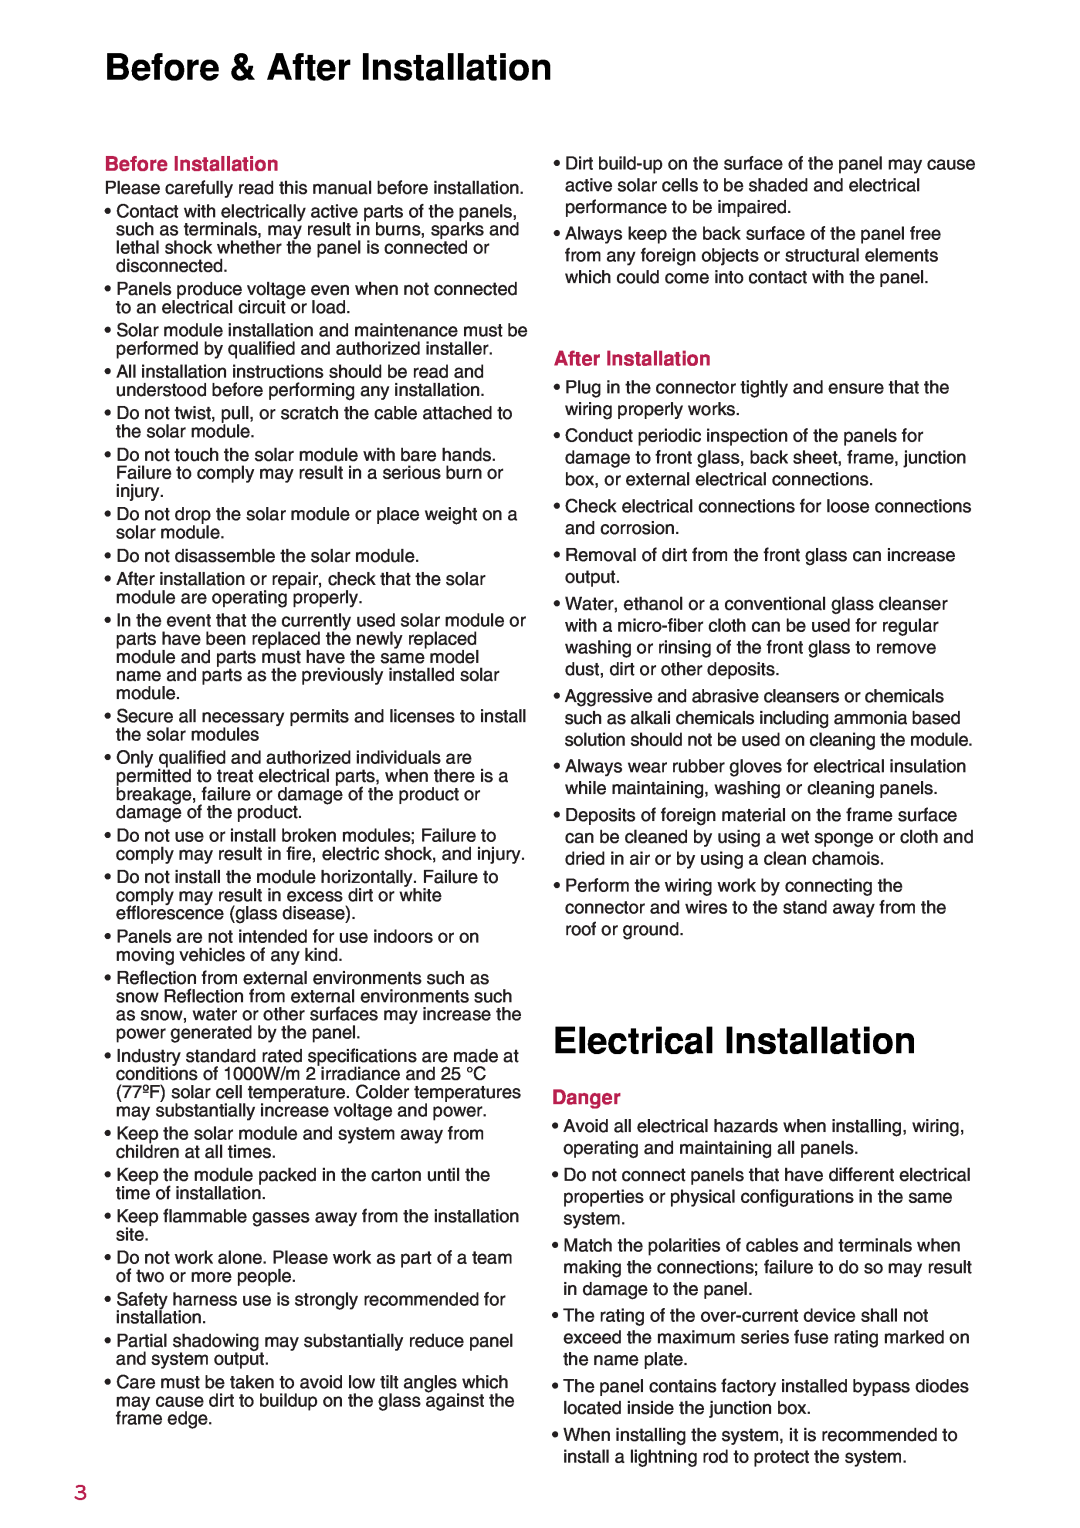 LG Electronics K)-G3, LGXXXS1C(W Before & After Installation, Electrical Installation, Before Installation, Danger 